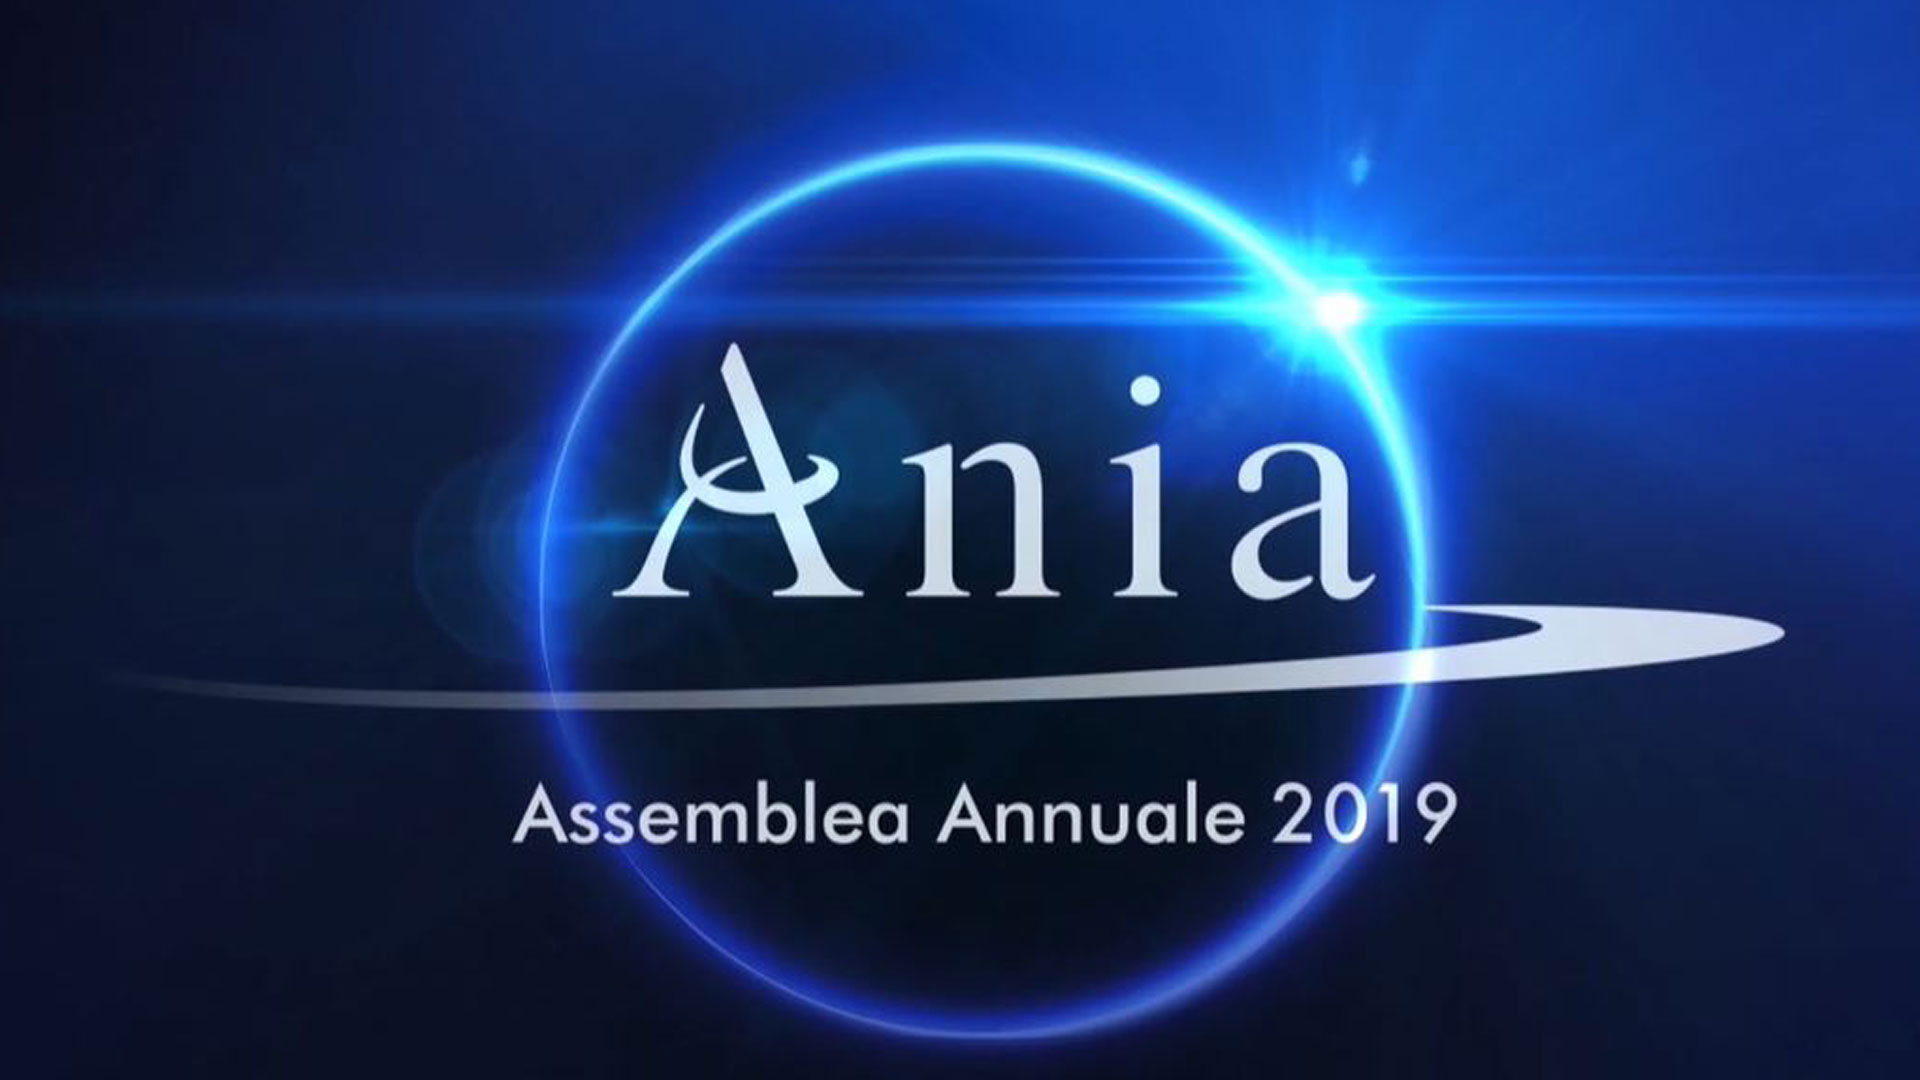 Annual Meeting 2019